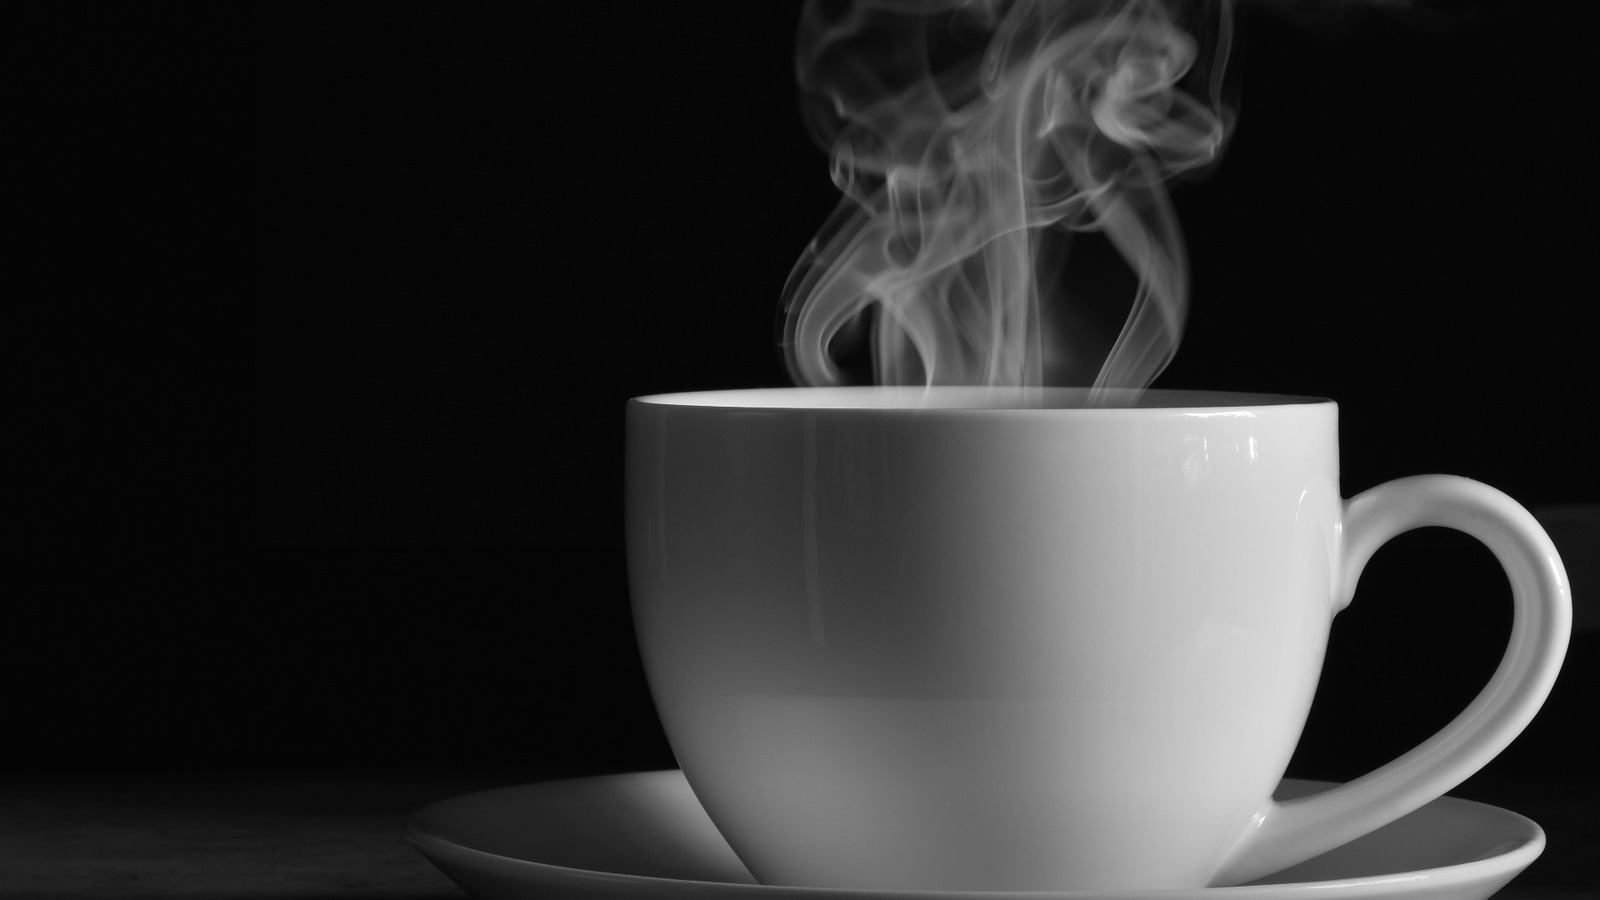 Coffee is hottest. Hot Coffee. Hot Coffee (мод). Пара пьет кофе. Hot Coffee черный экран.